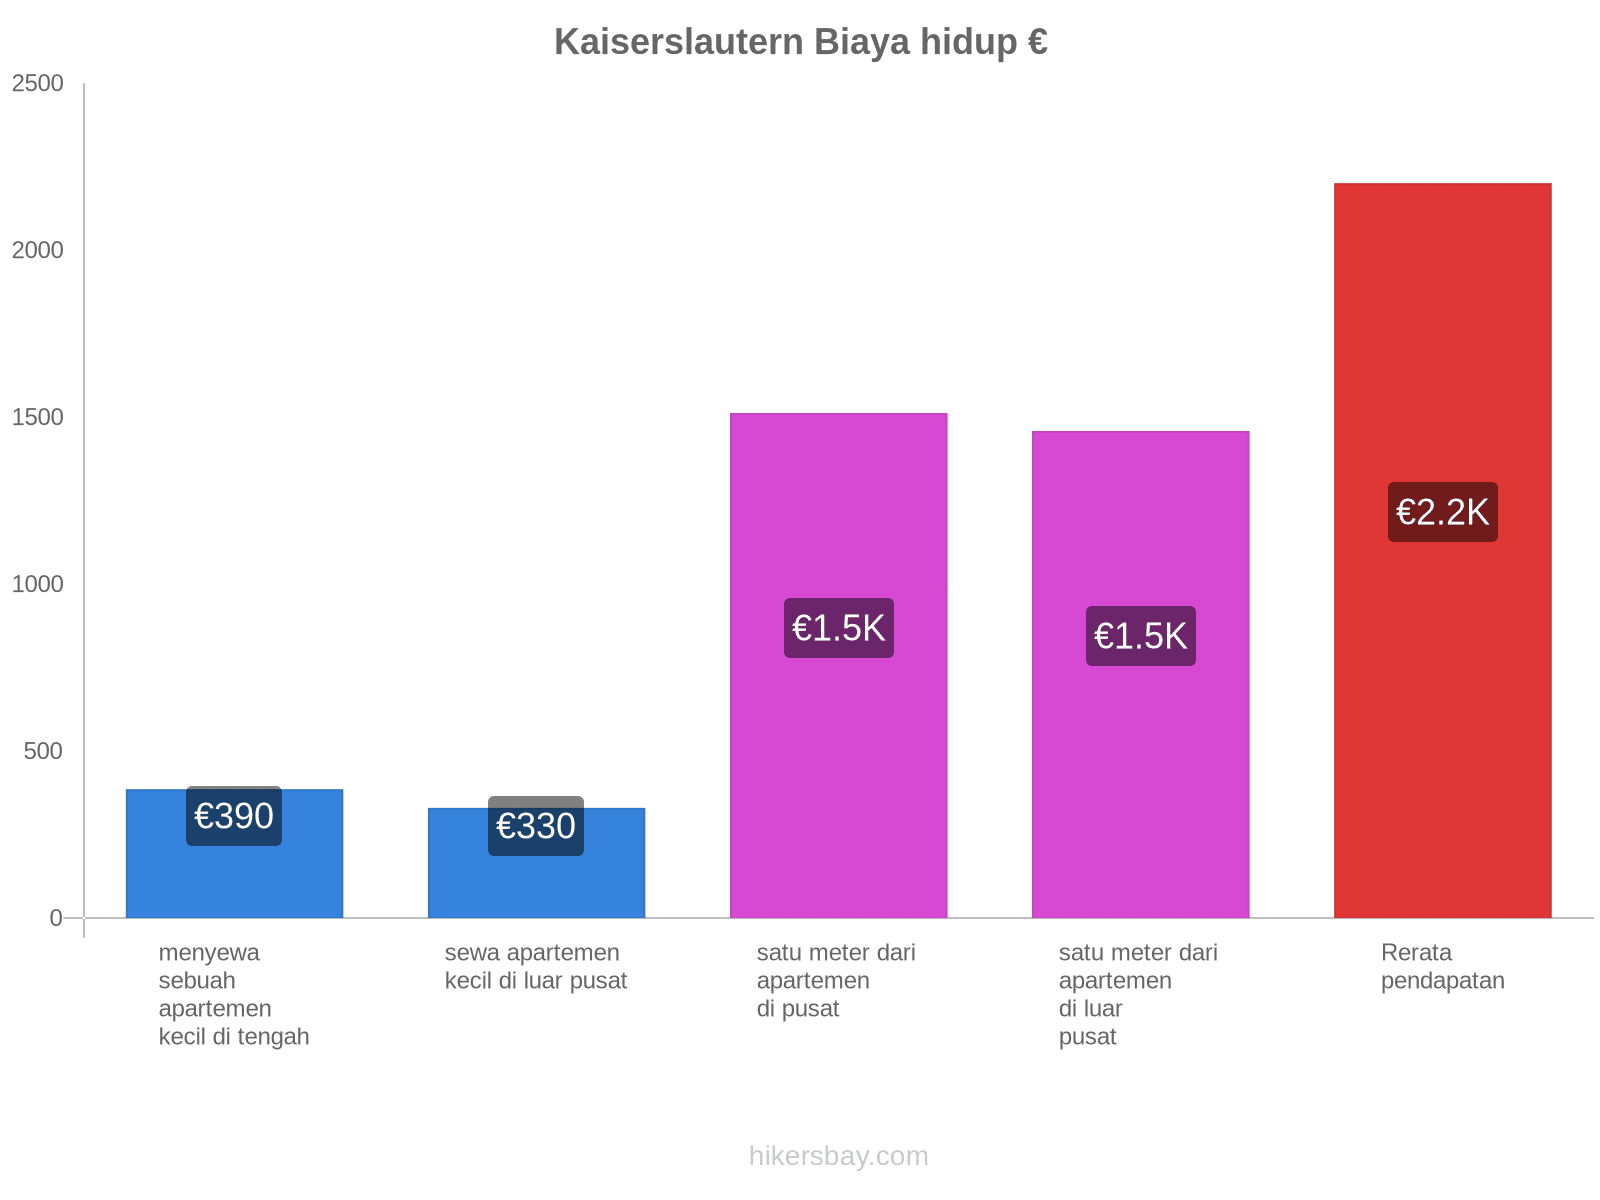 Kaiserslautern biaya hidup hikersbay.com